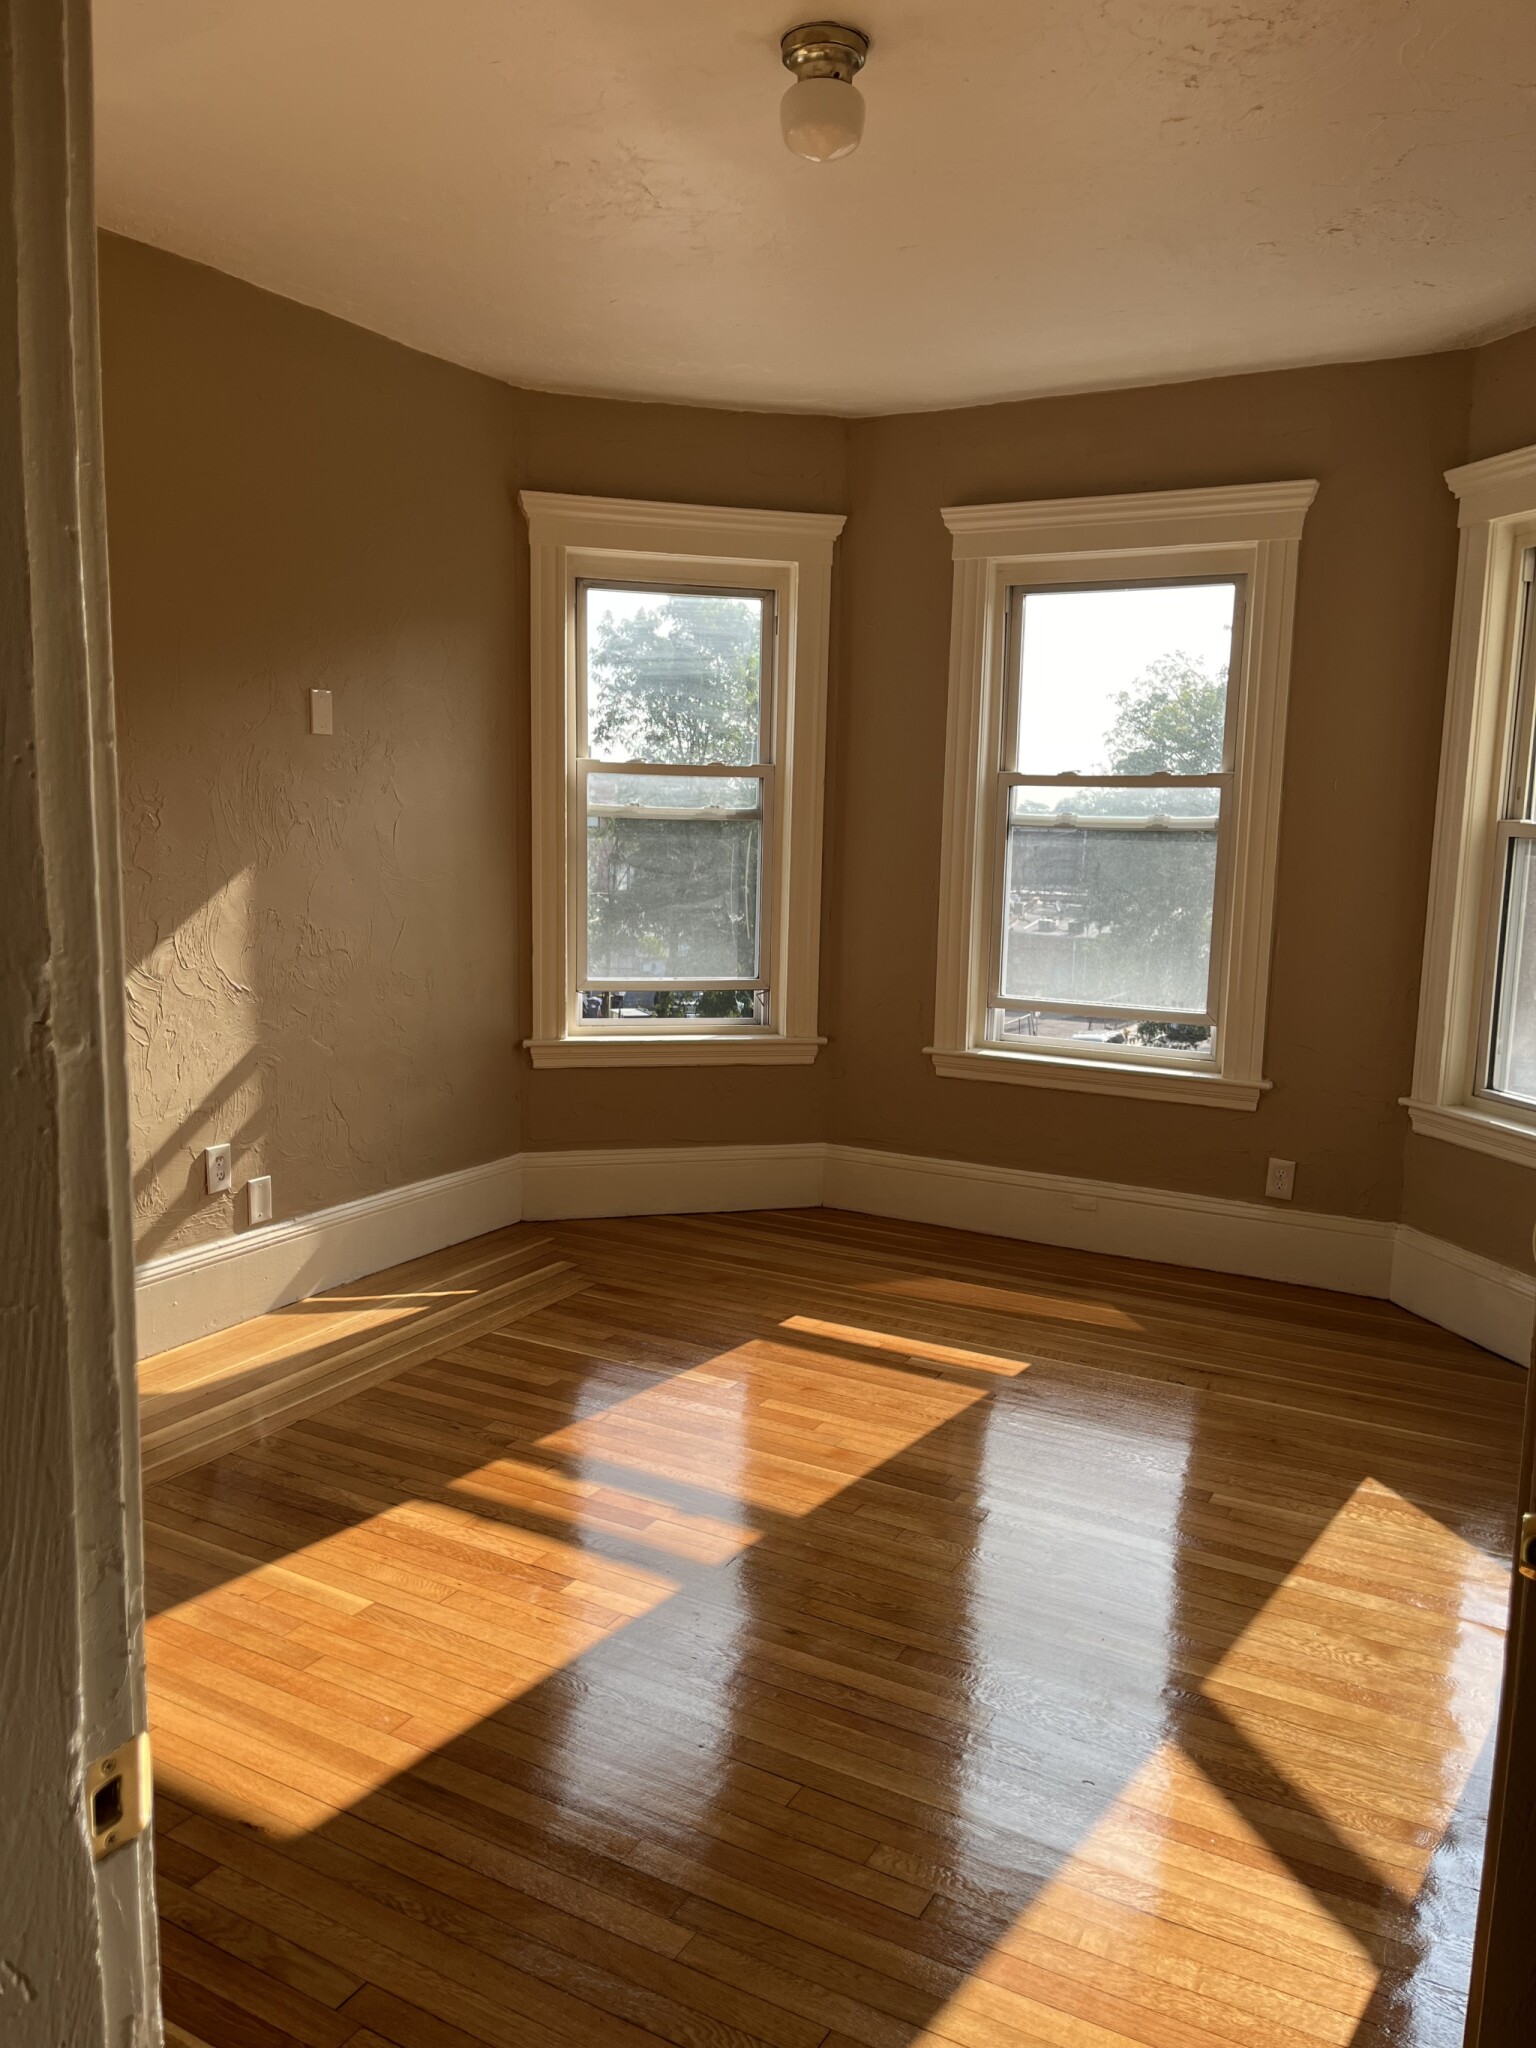 Photos of apartment on Howaland,Boston MA 02121